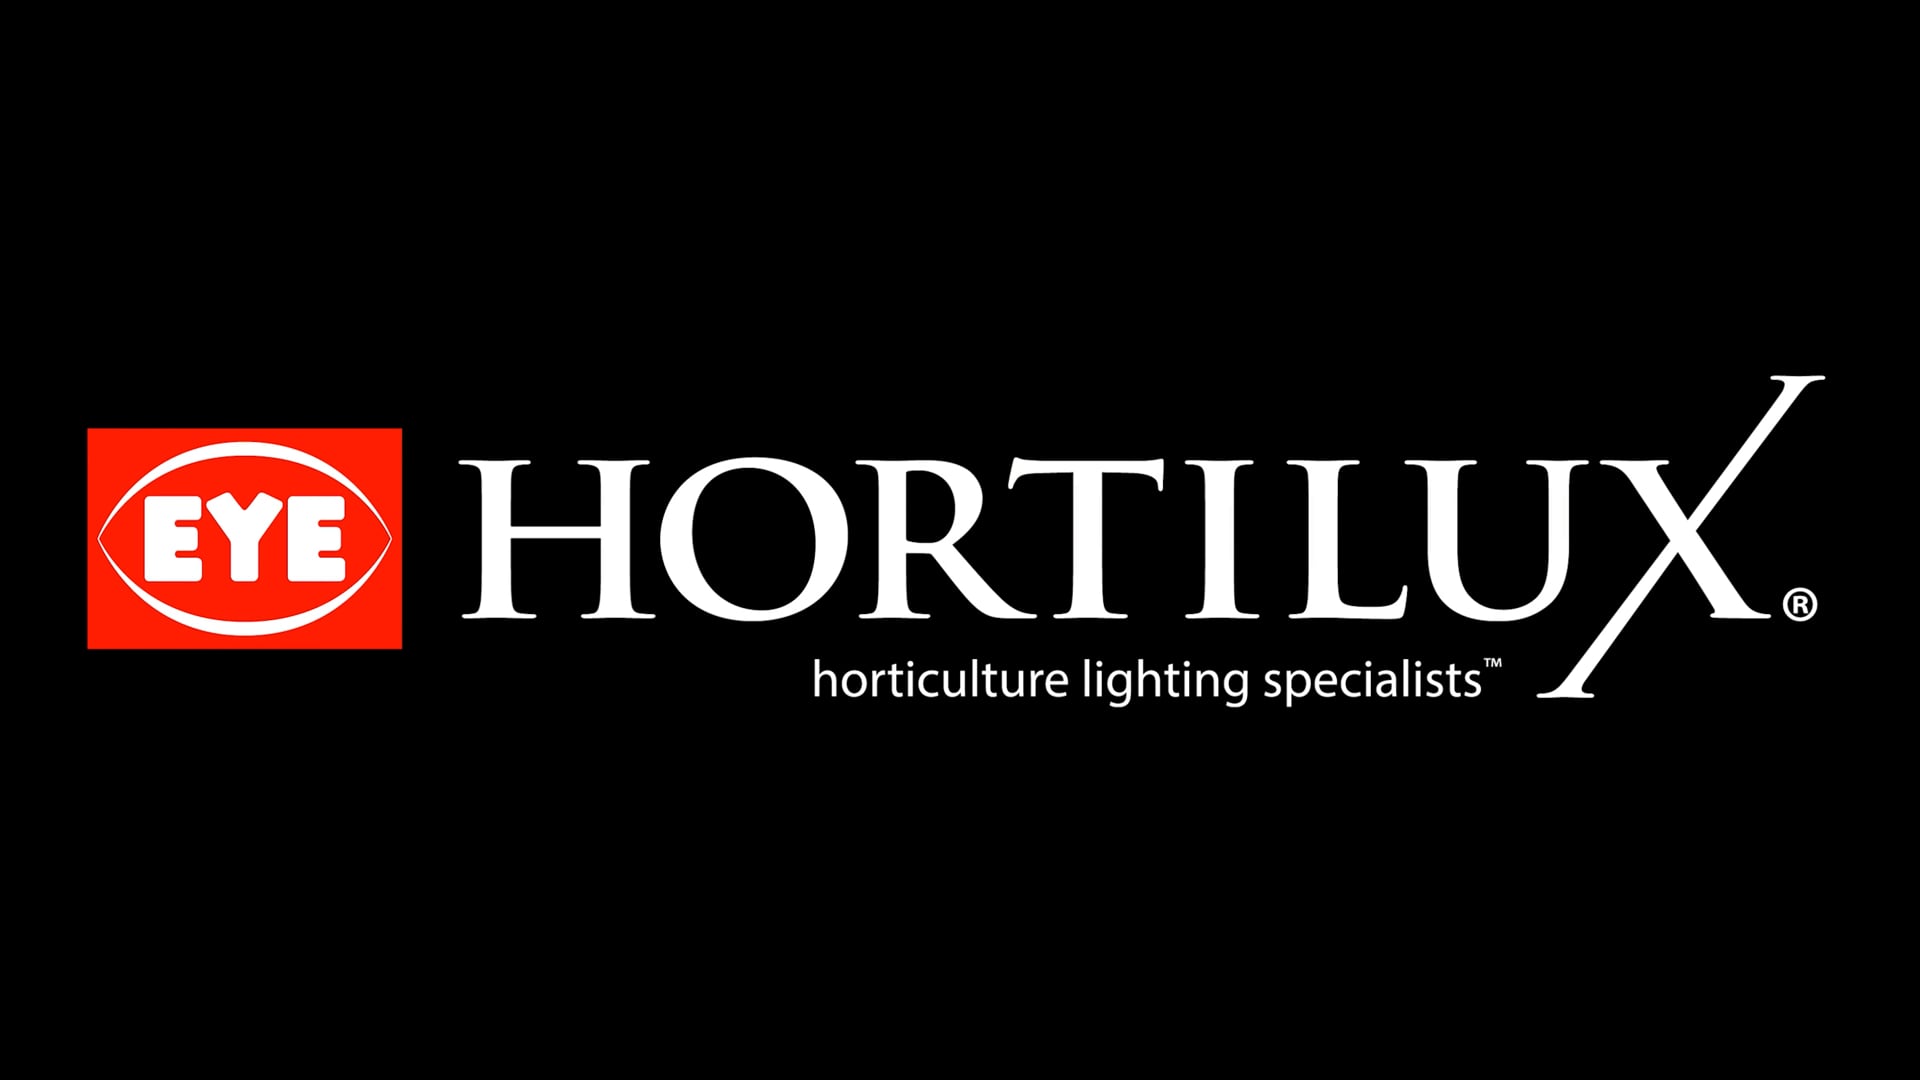 Eye Hortilux Brand Video